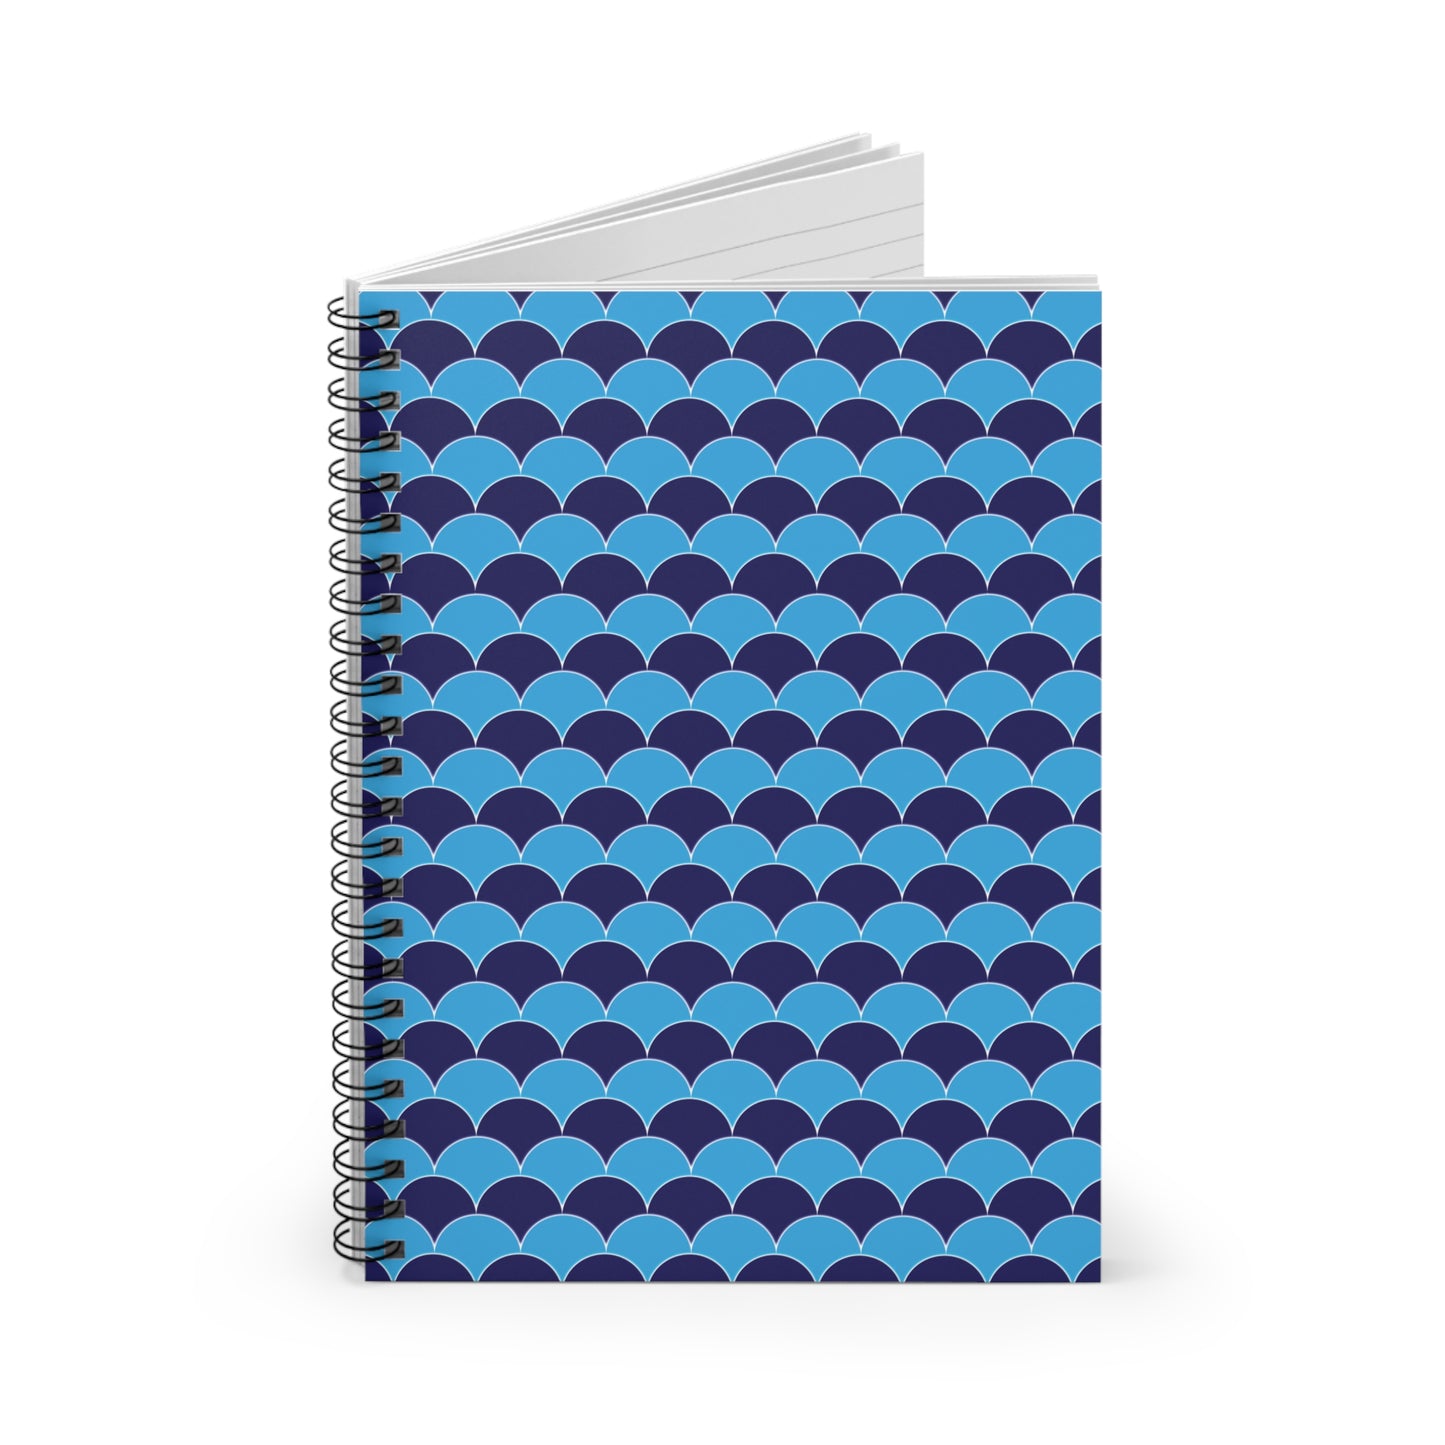 Blue Fans - Azure 0080FF - Spiral Notebook - Ruled Line